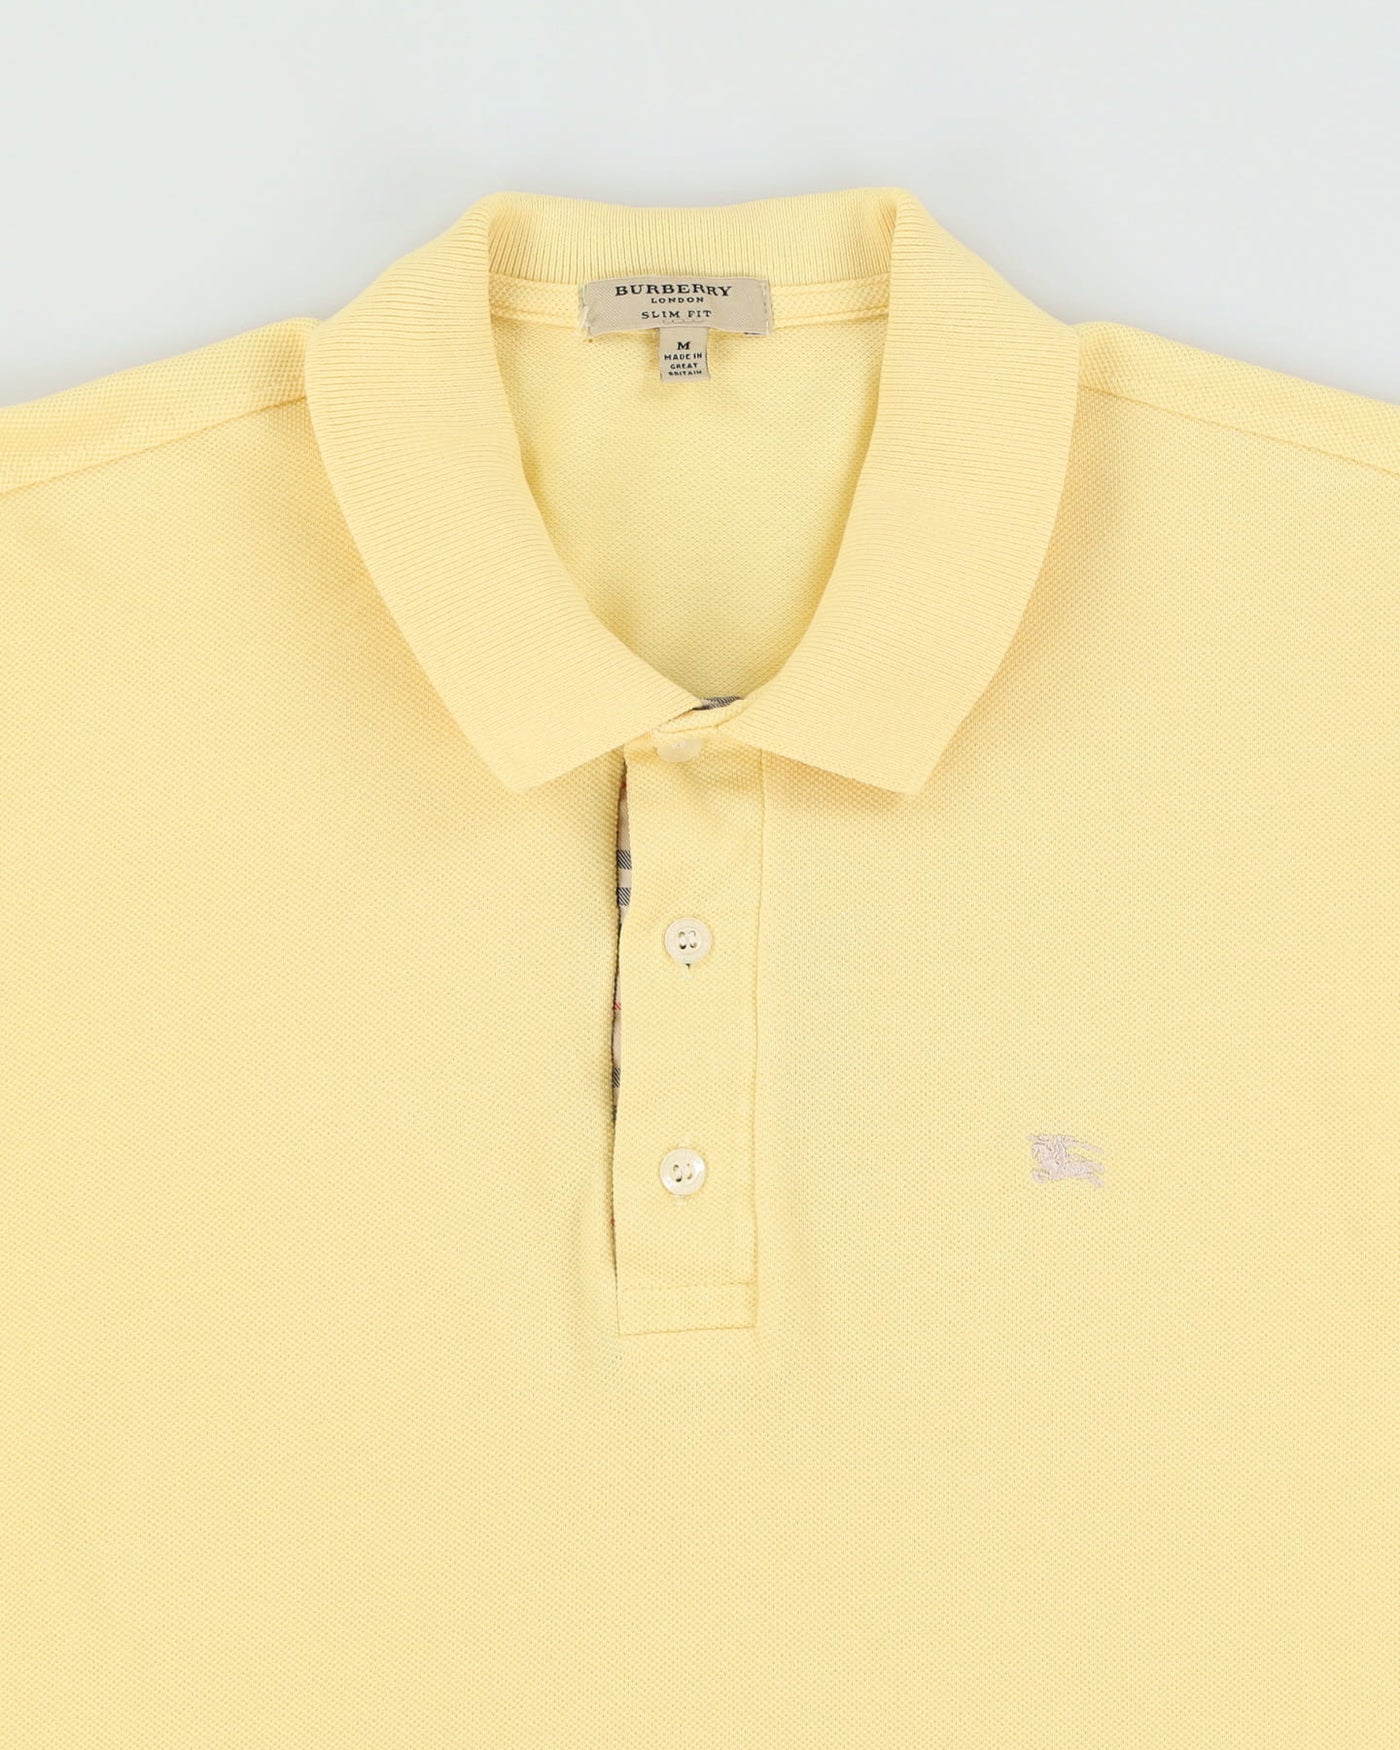 Burberry Slim Fit Yellow Polo Shirt - M